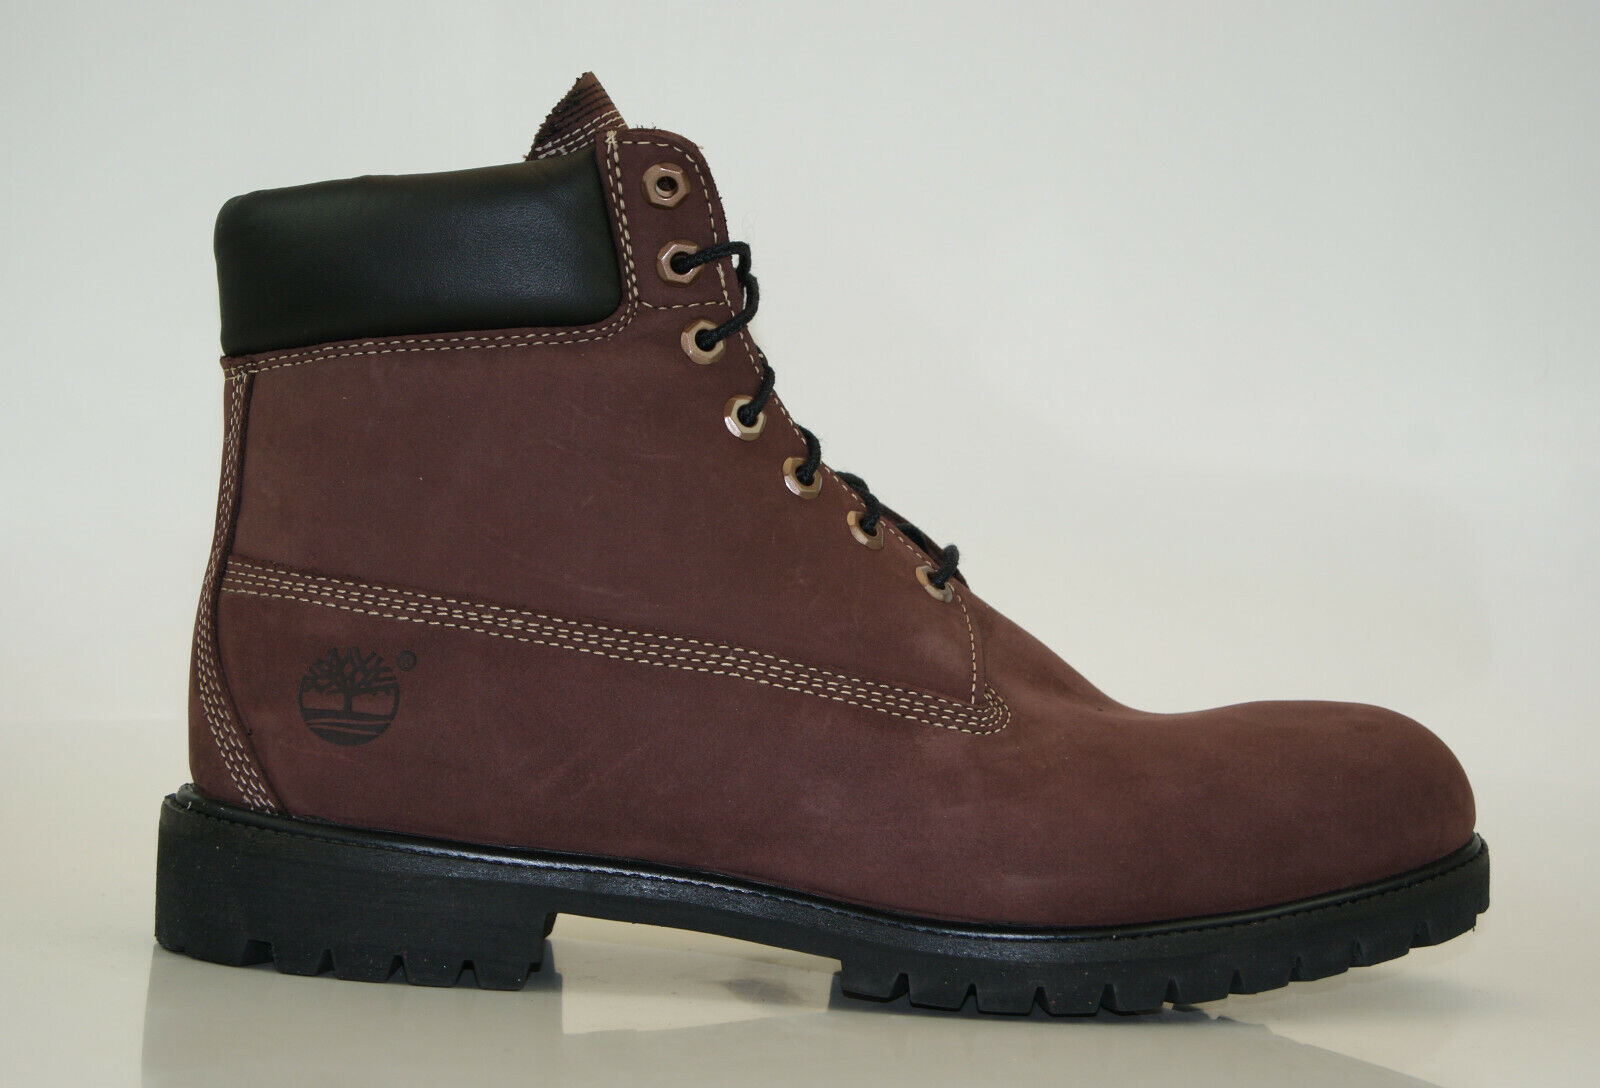 Timberland 6 Inch Premium Boots Waterproof Stiefel Herren Schnürstiefel 33536